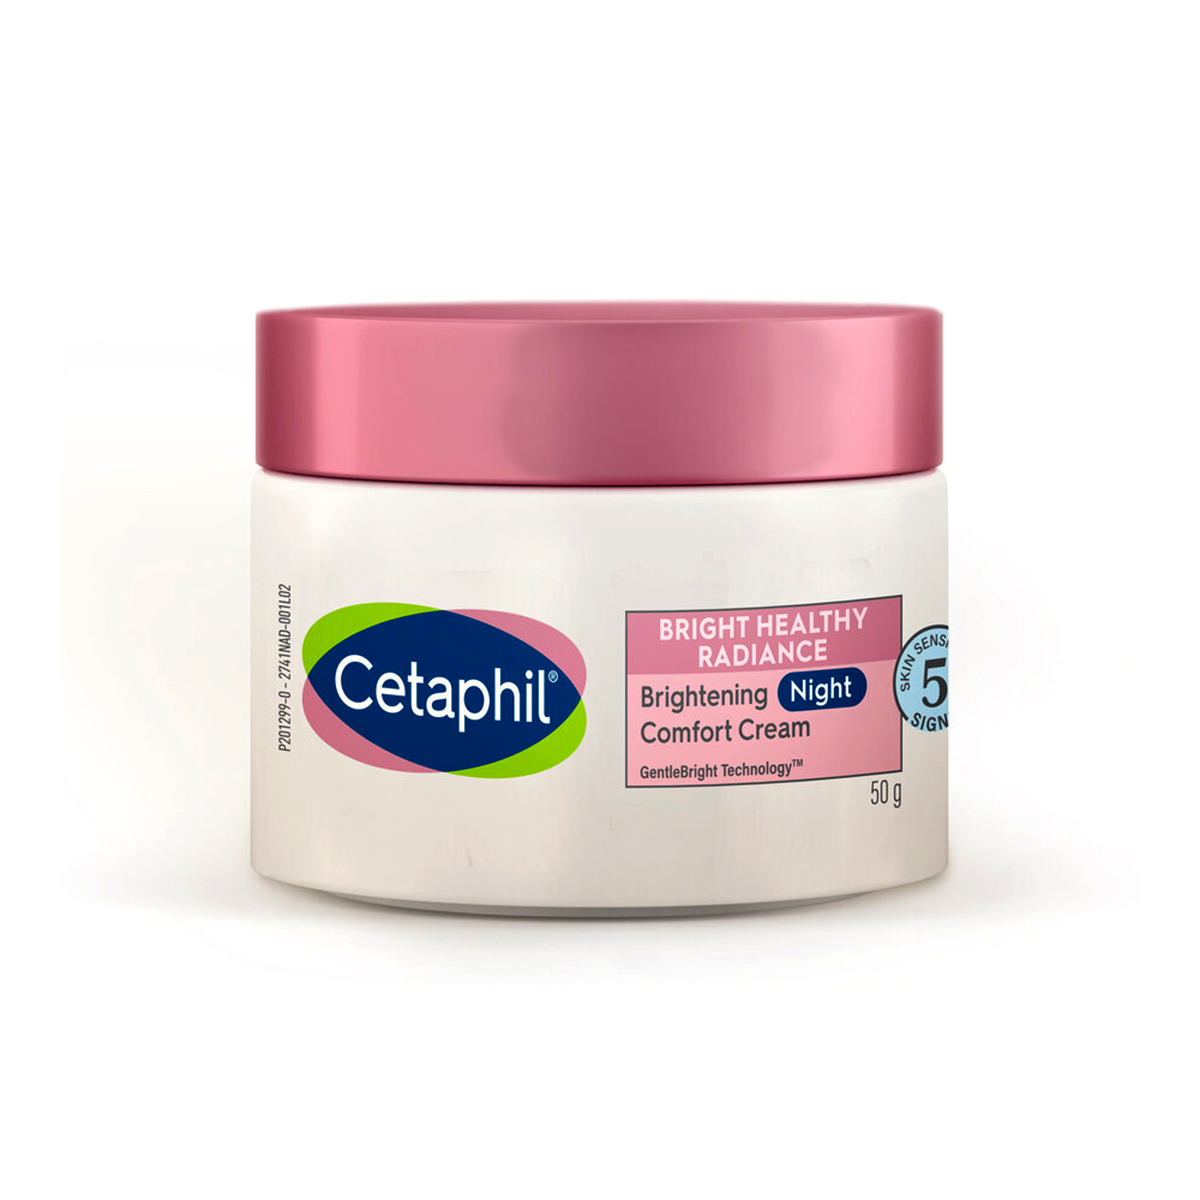 First product image of Cetaphil Brightening Night Comfort Cream 50g